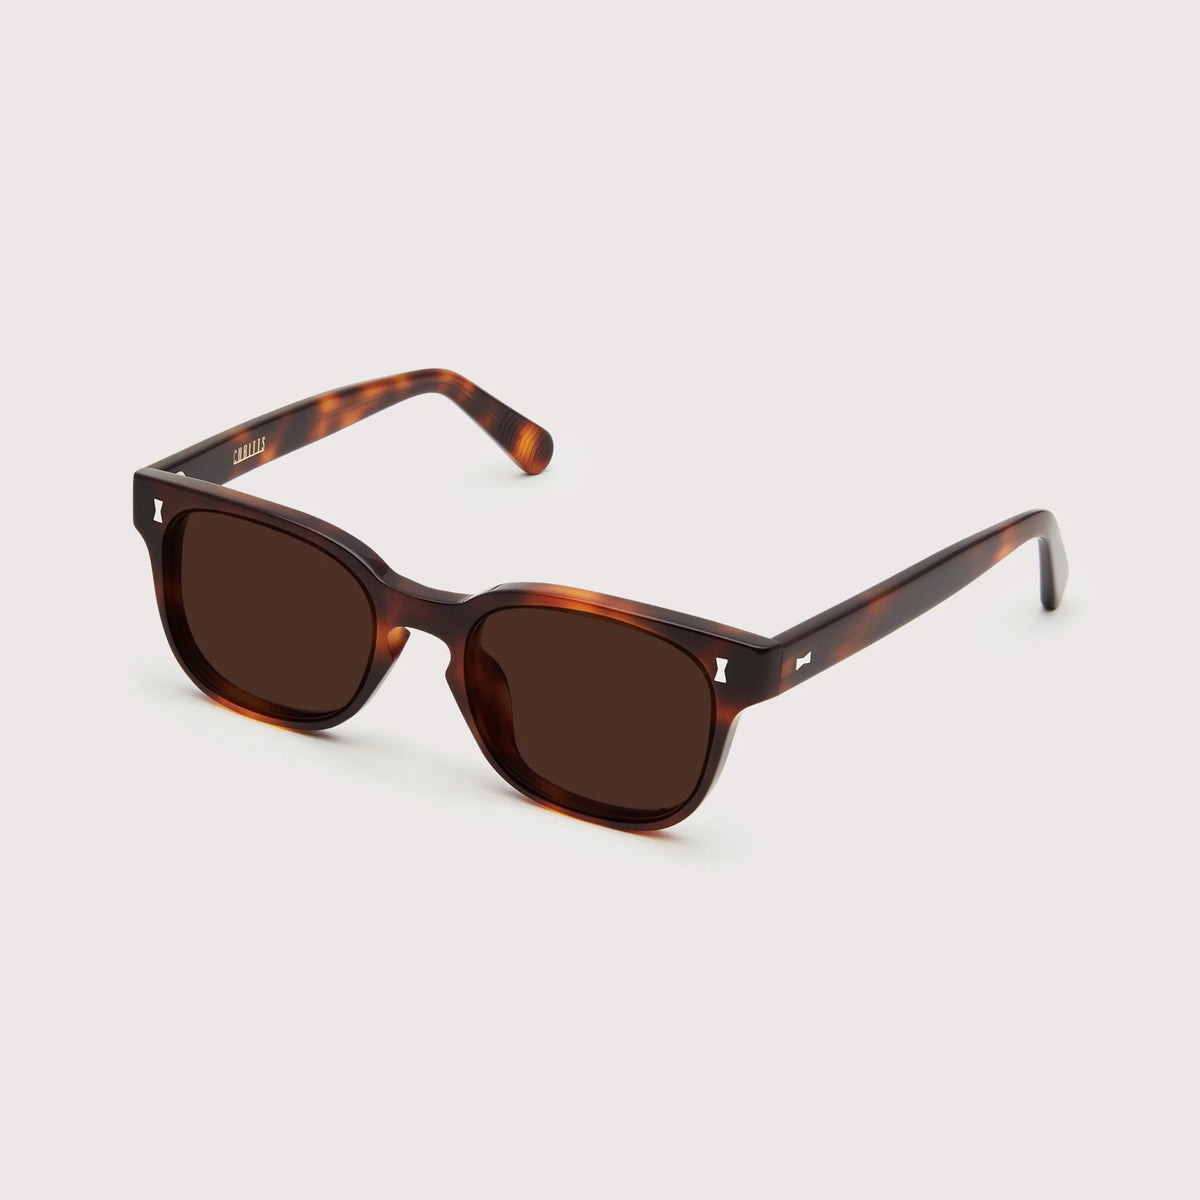 Dark Turtle Cubitts Blundell sunglasses